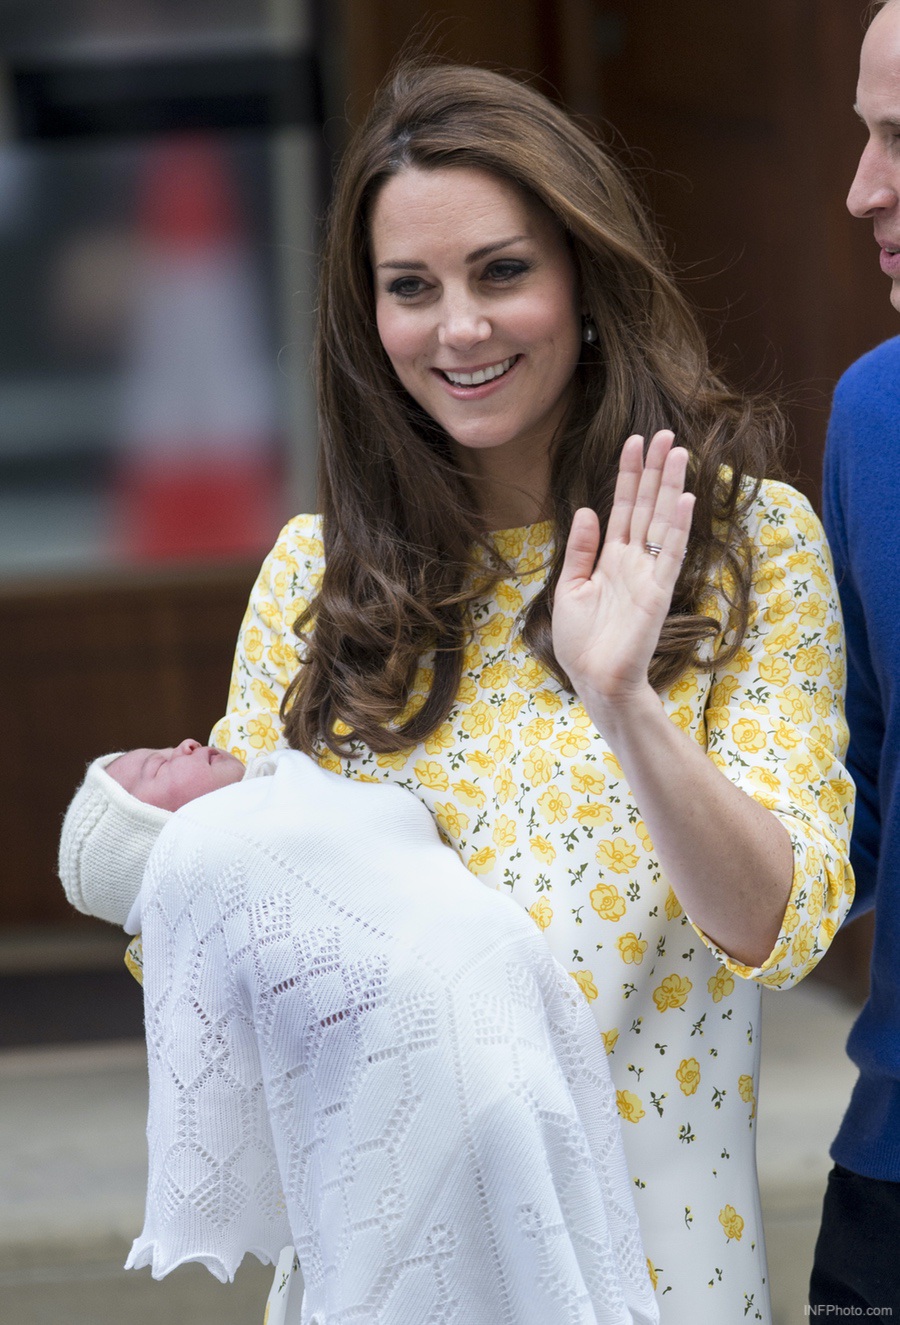 Kate Middleton holding her baby, Princess Charlotte of Cambridge